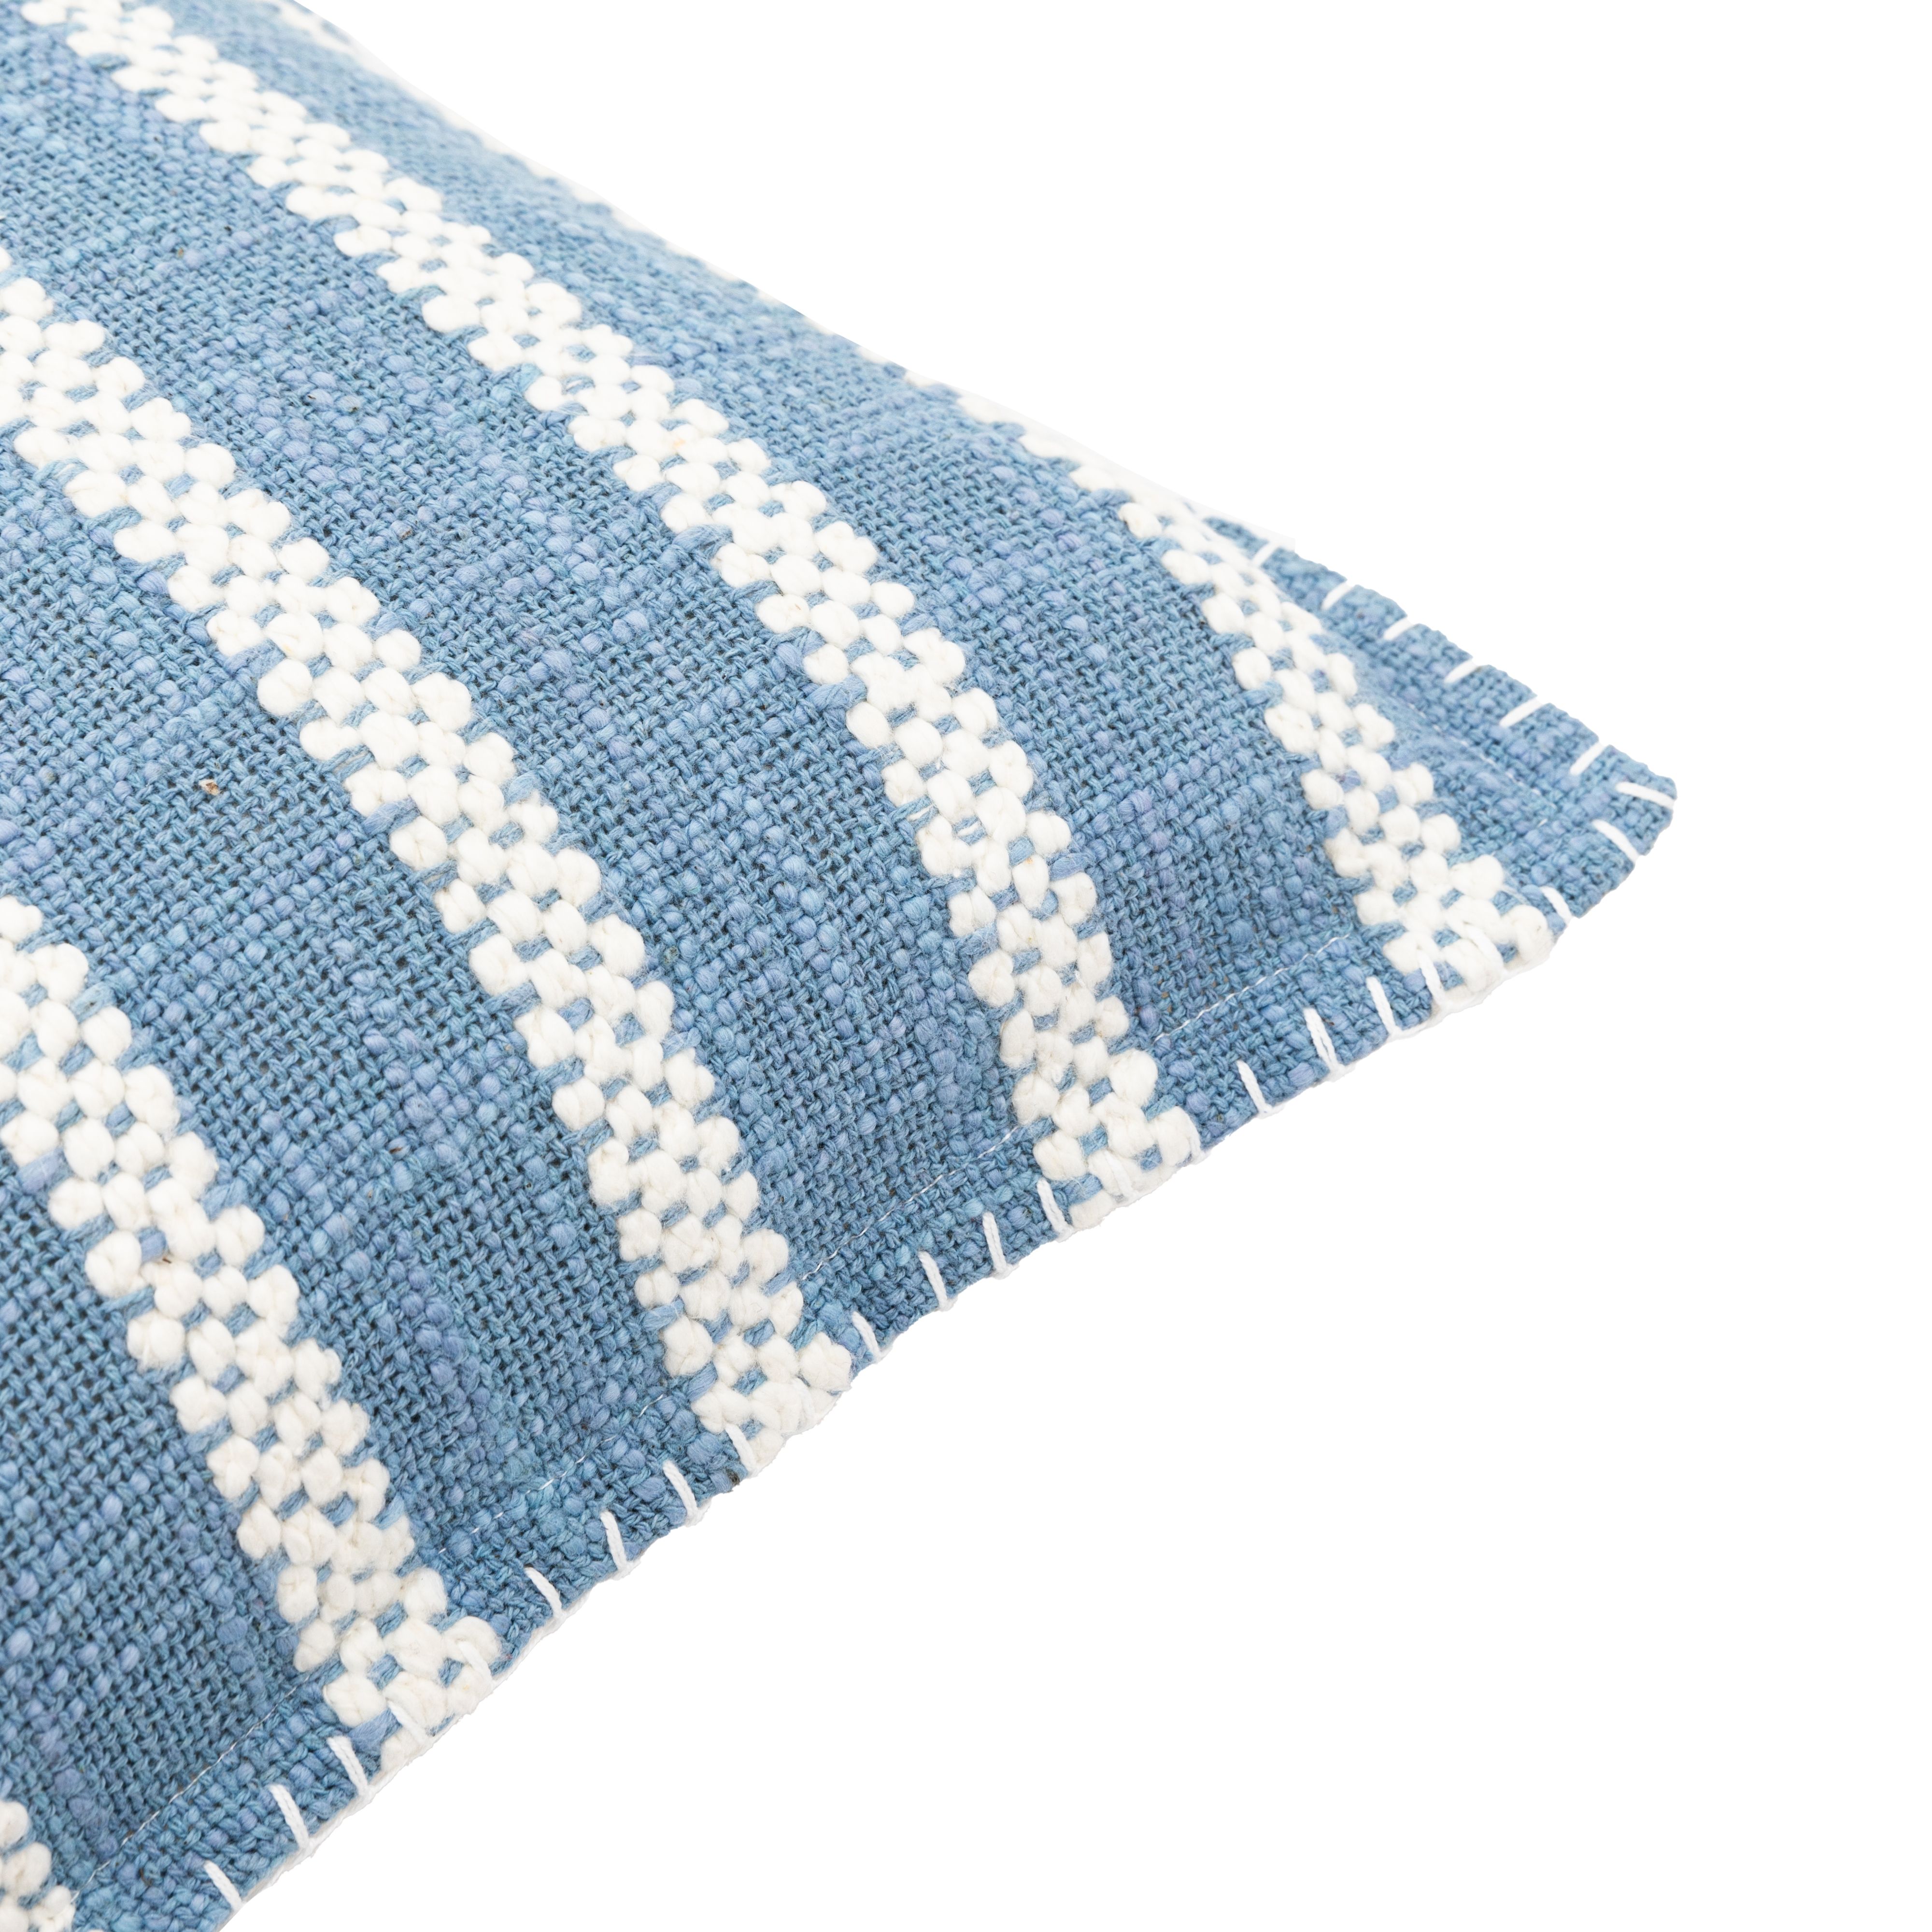 Blue & White Striped Indoor Cushion (L)45cm x (W)45cm